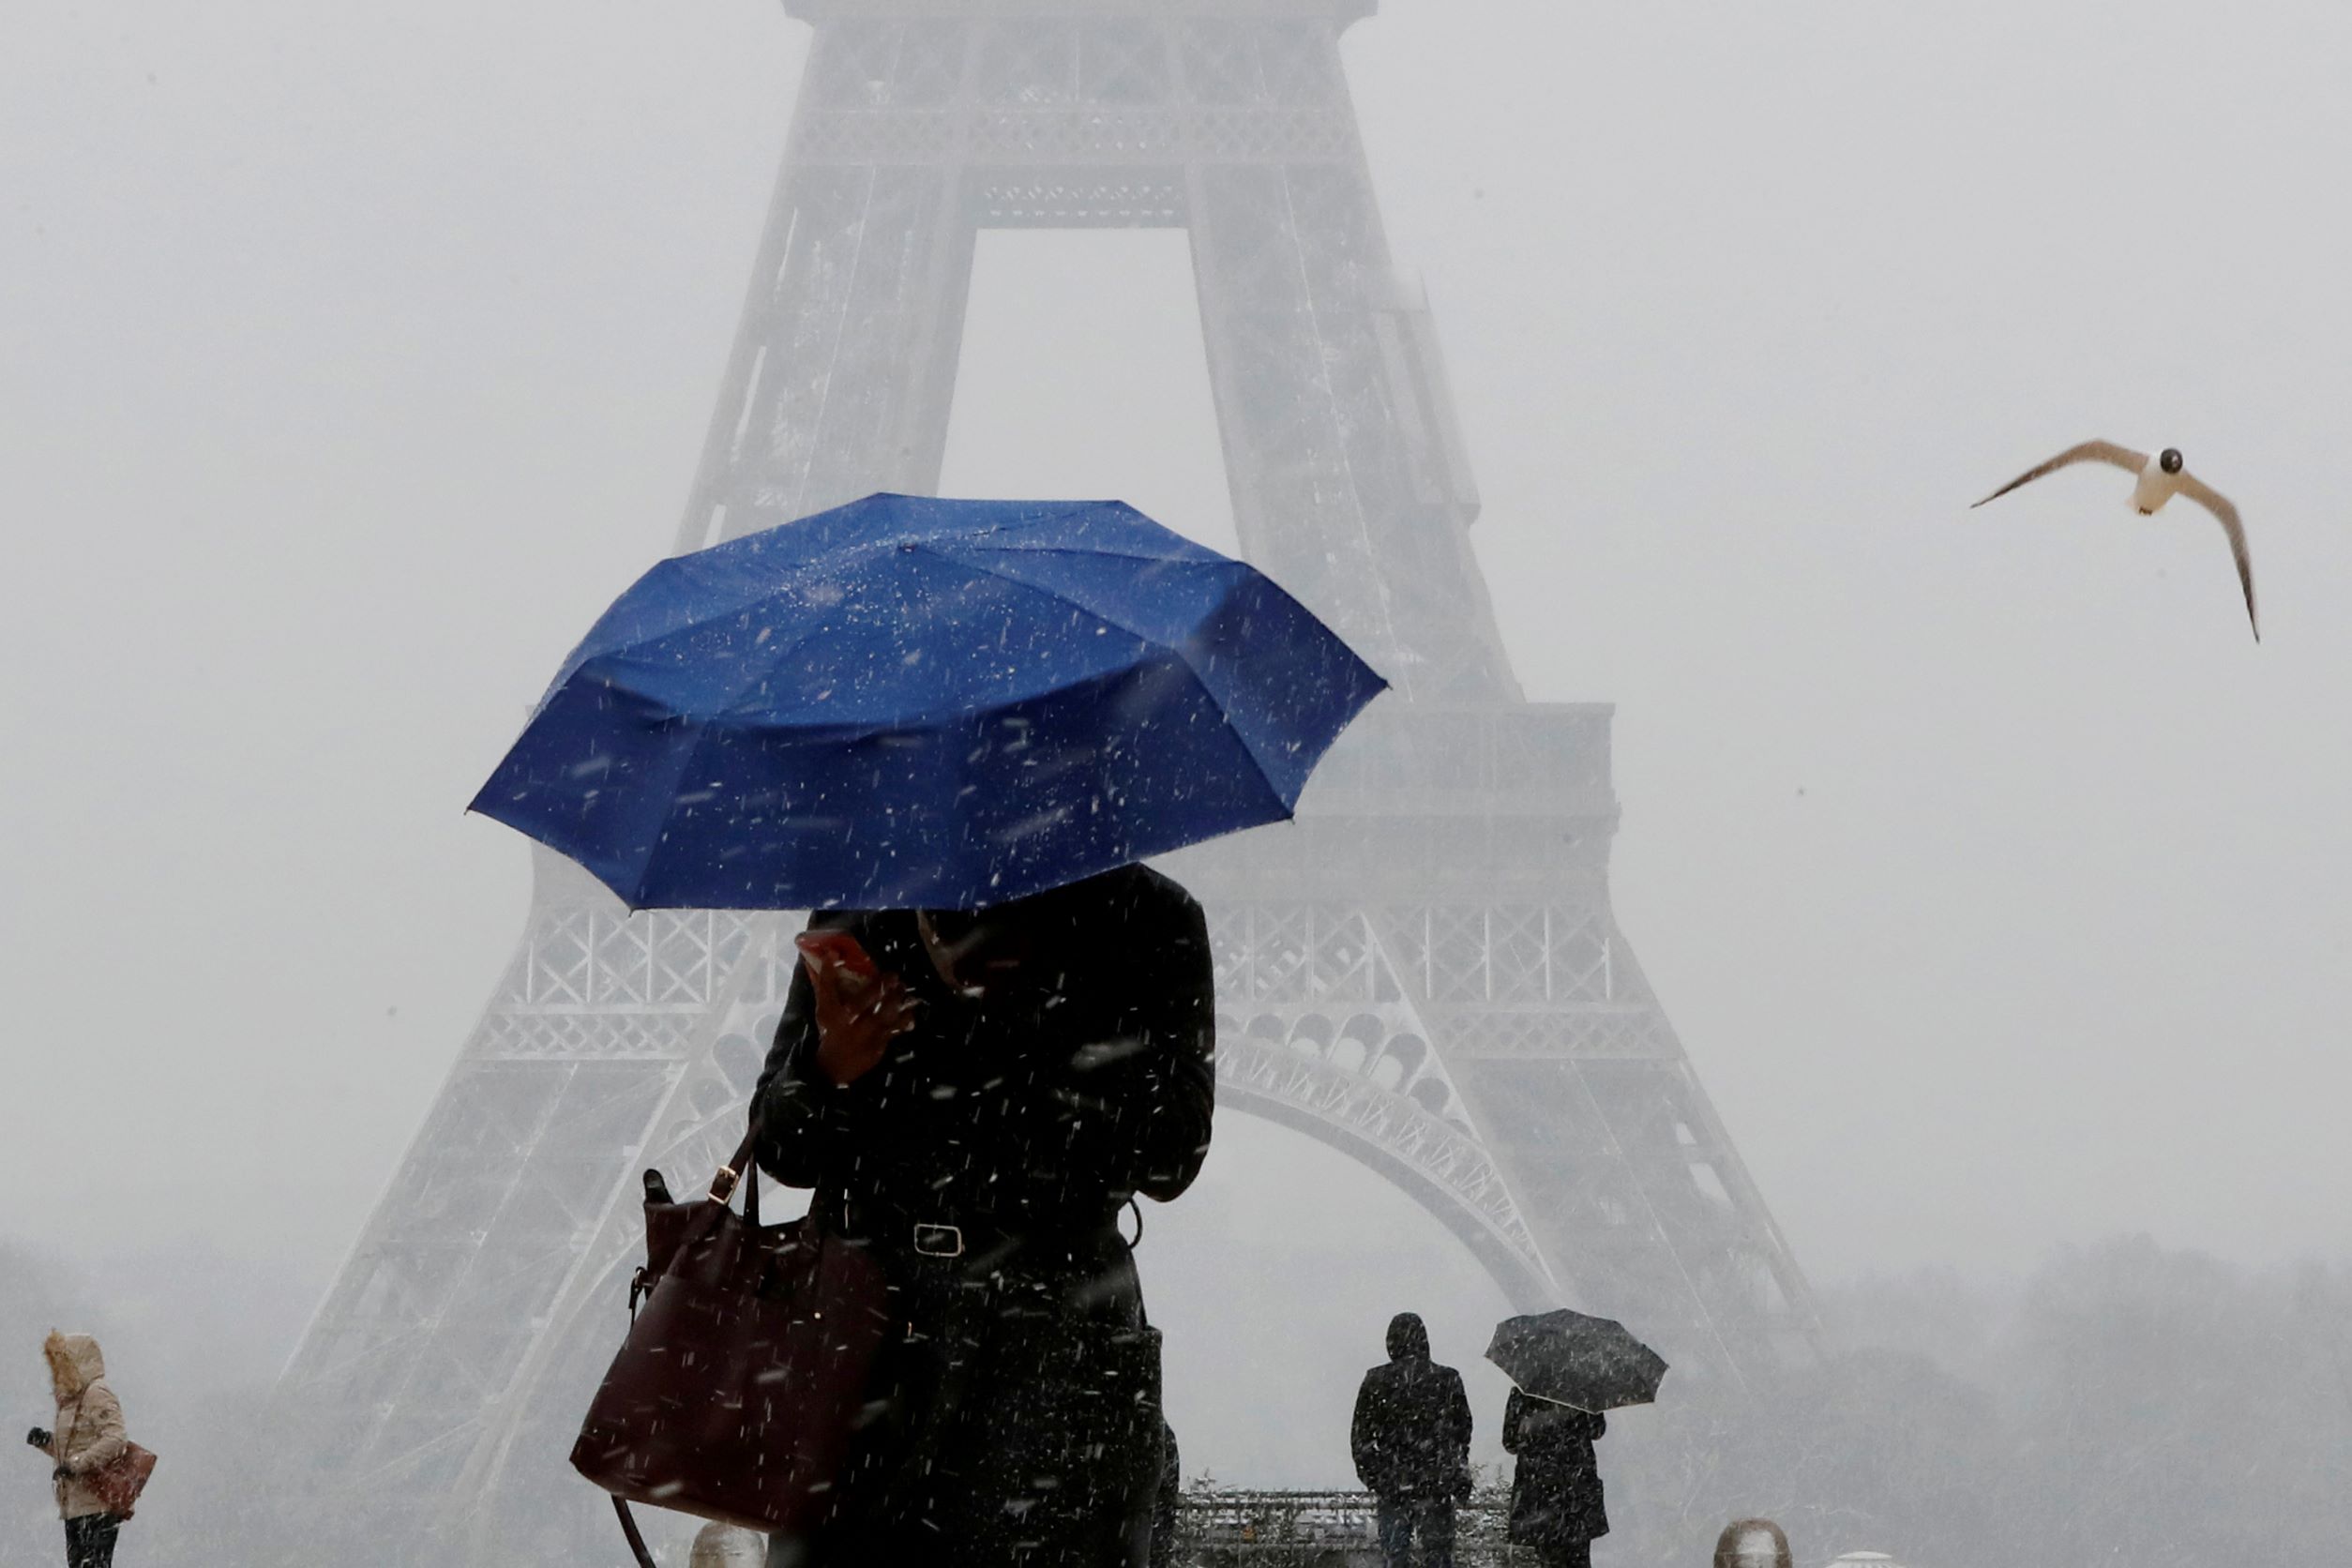 A person holding an umbrella walks towards the Eiffel Tower